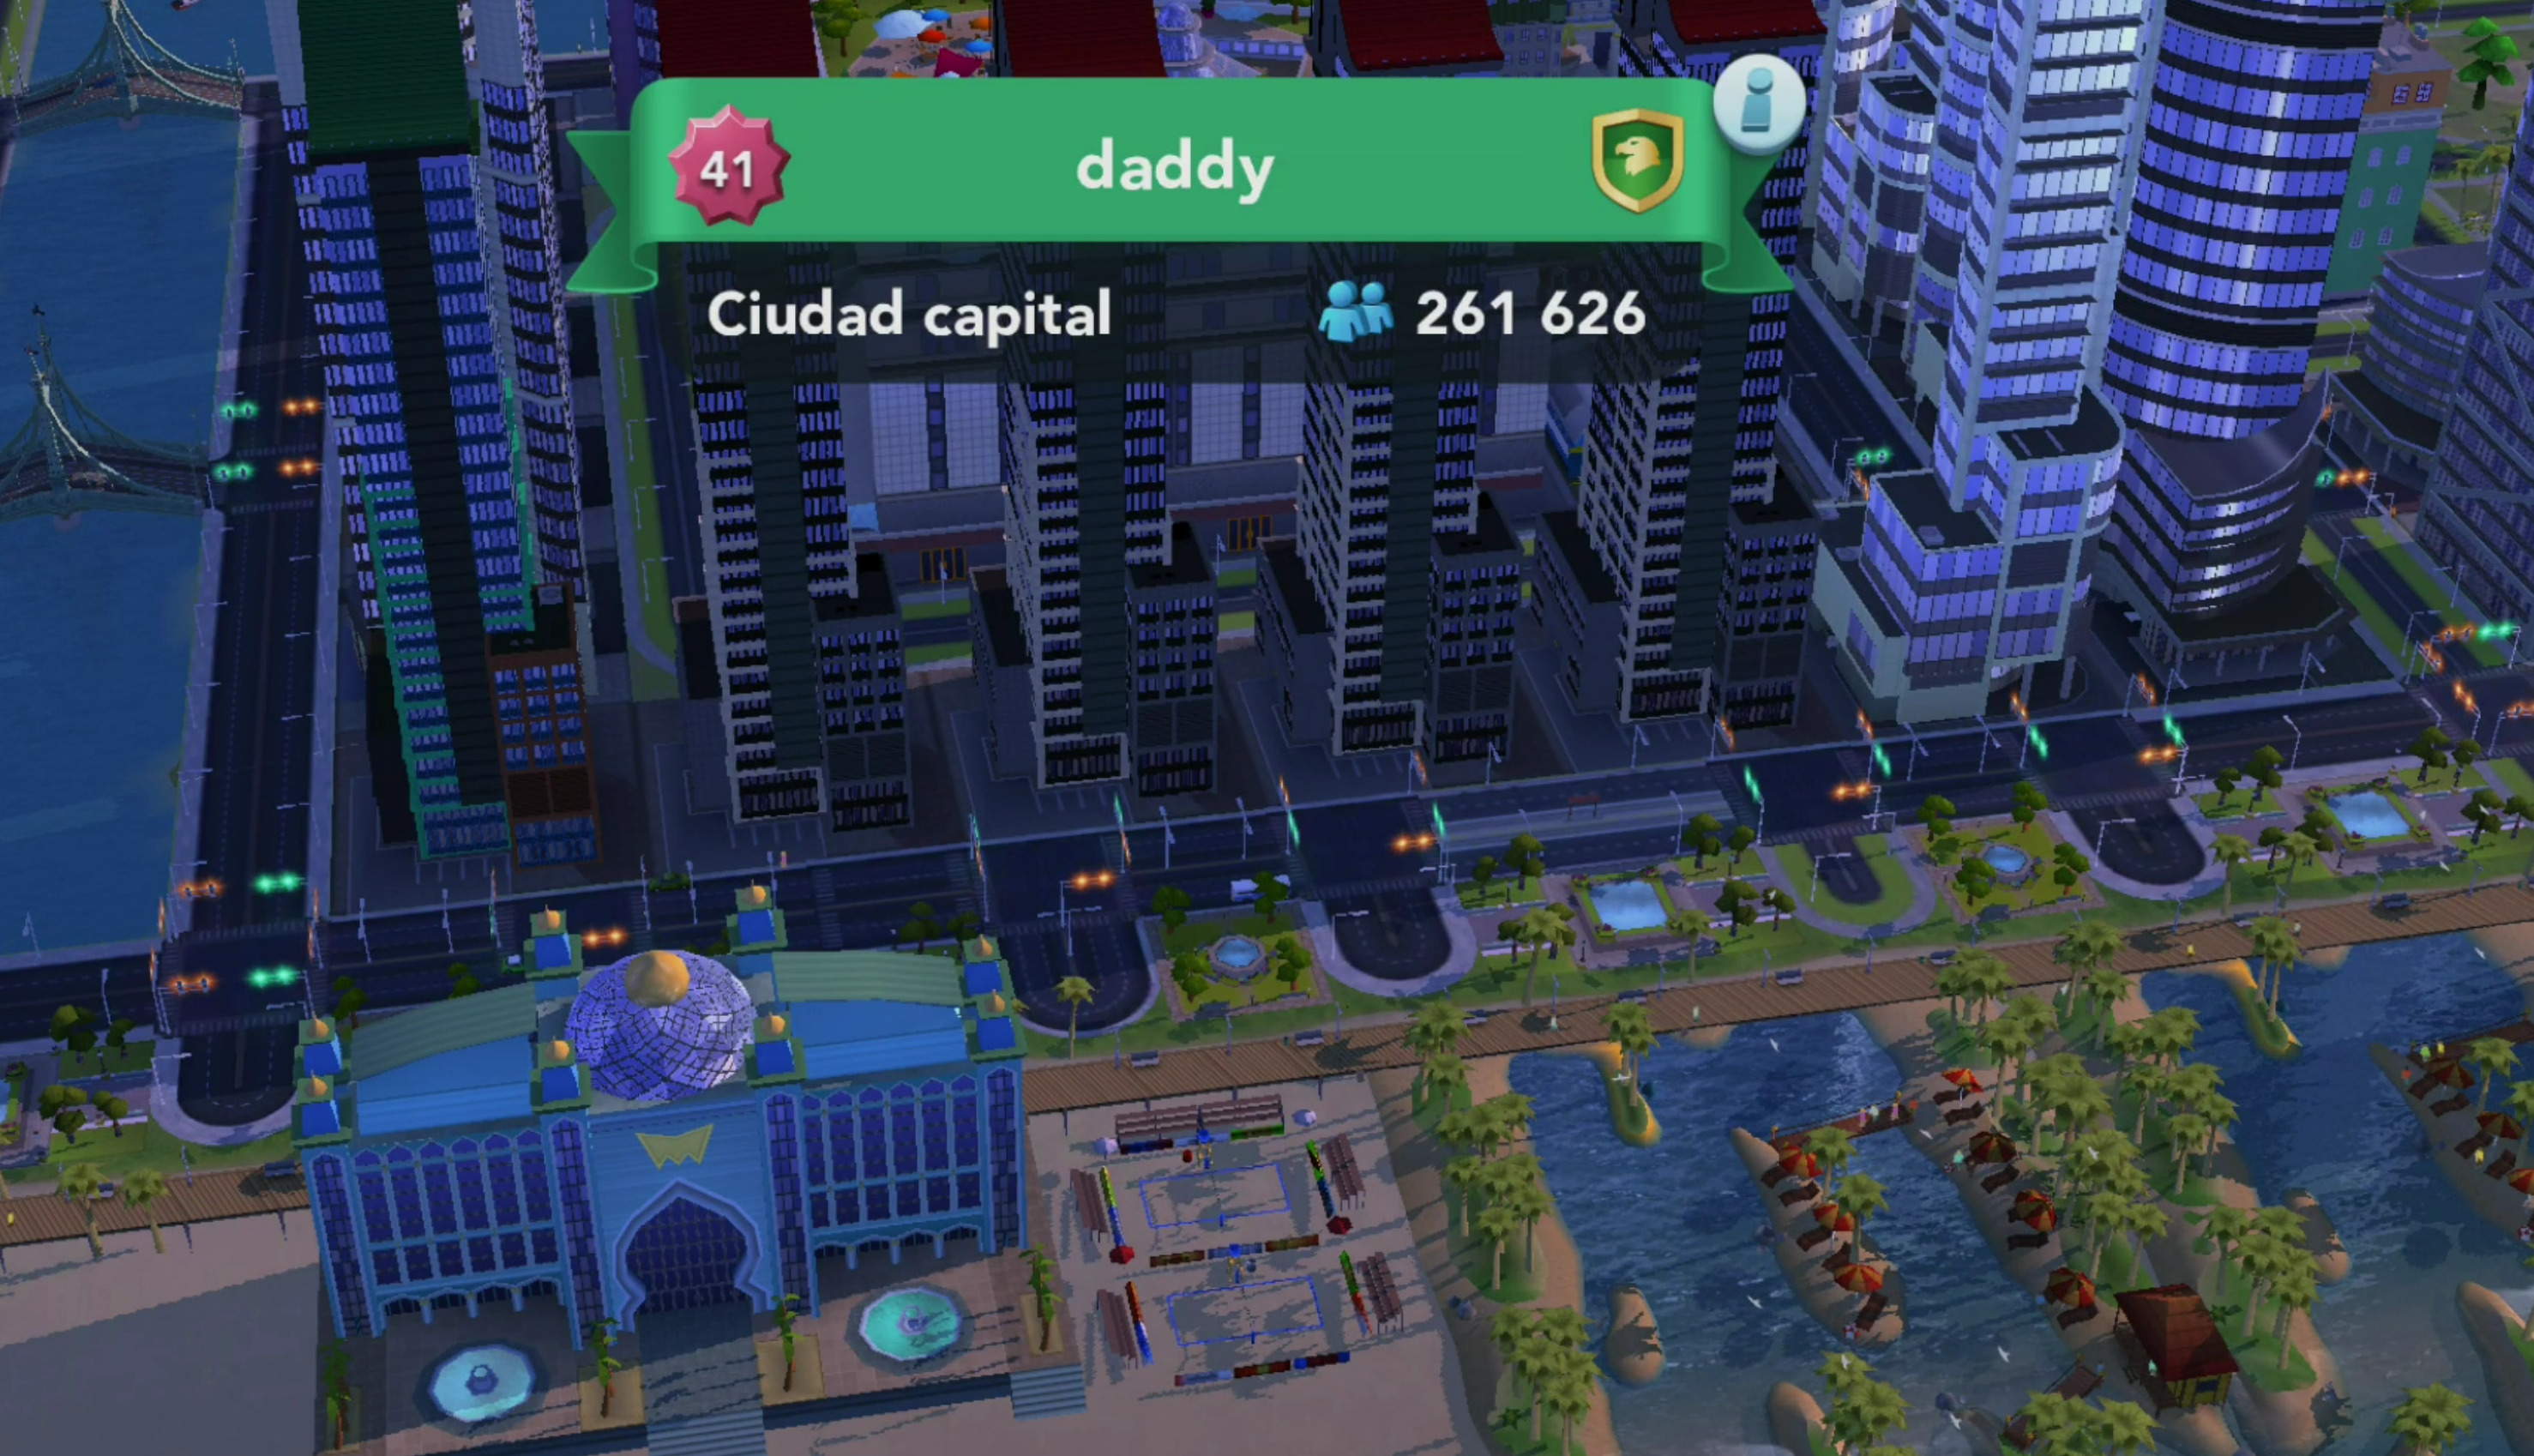 Secondary city Daddy (Aldea City)